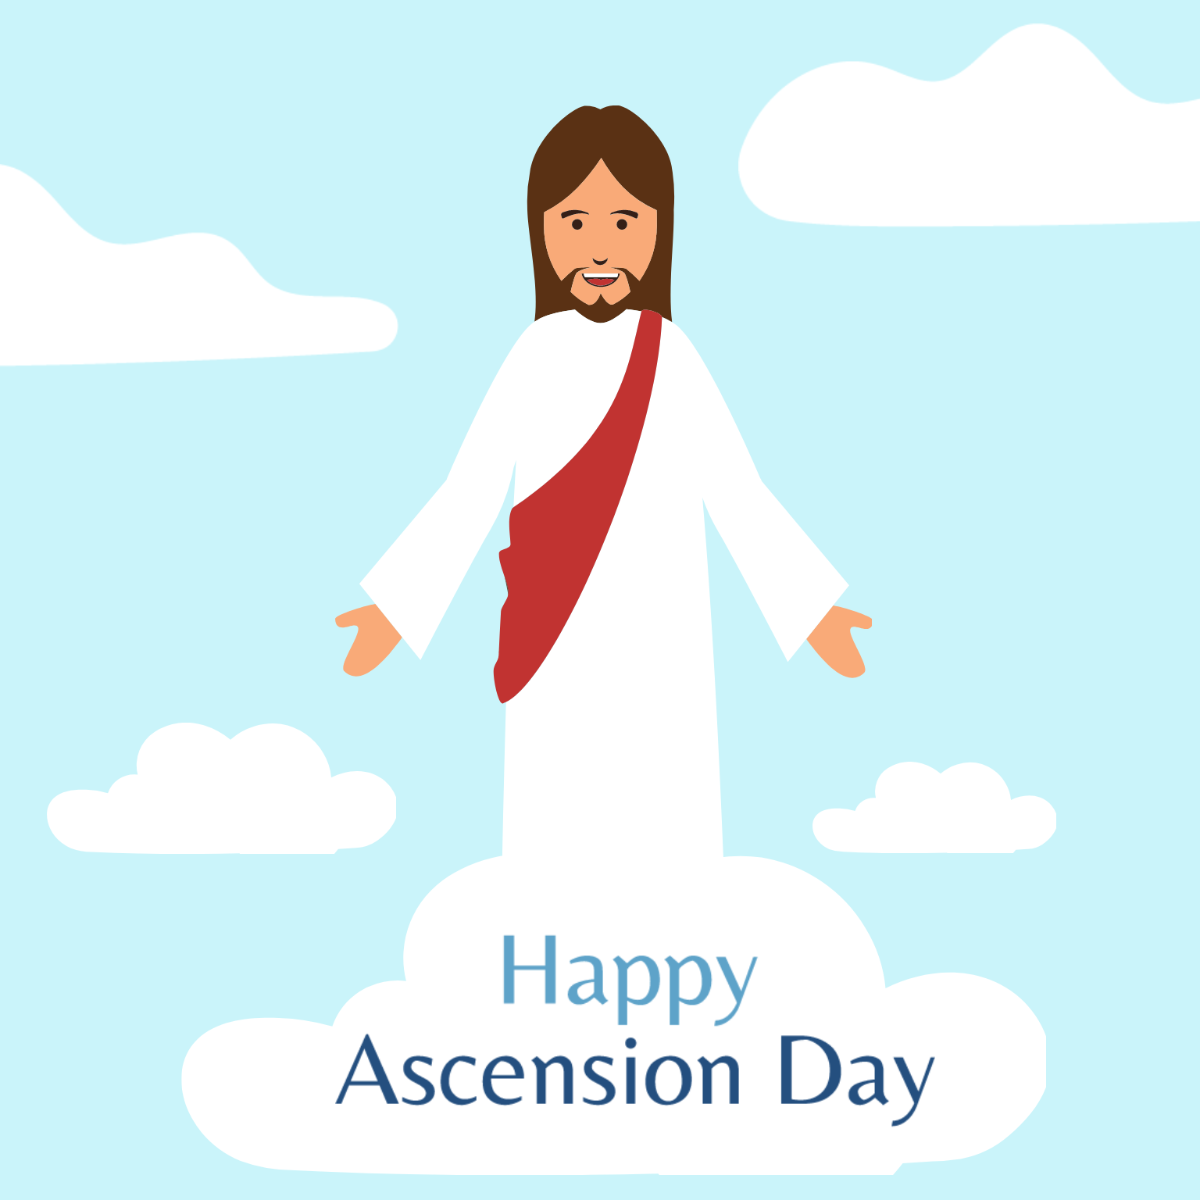 Happy Ascension Day Illustration